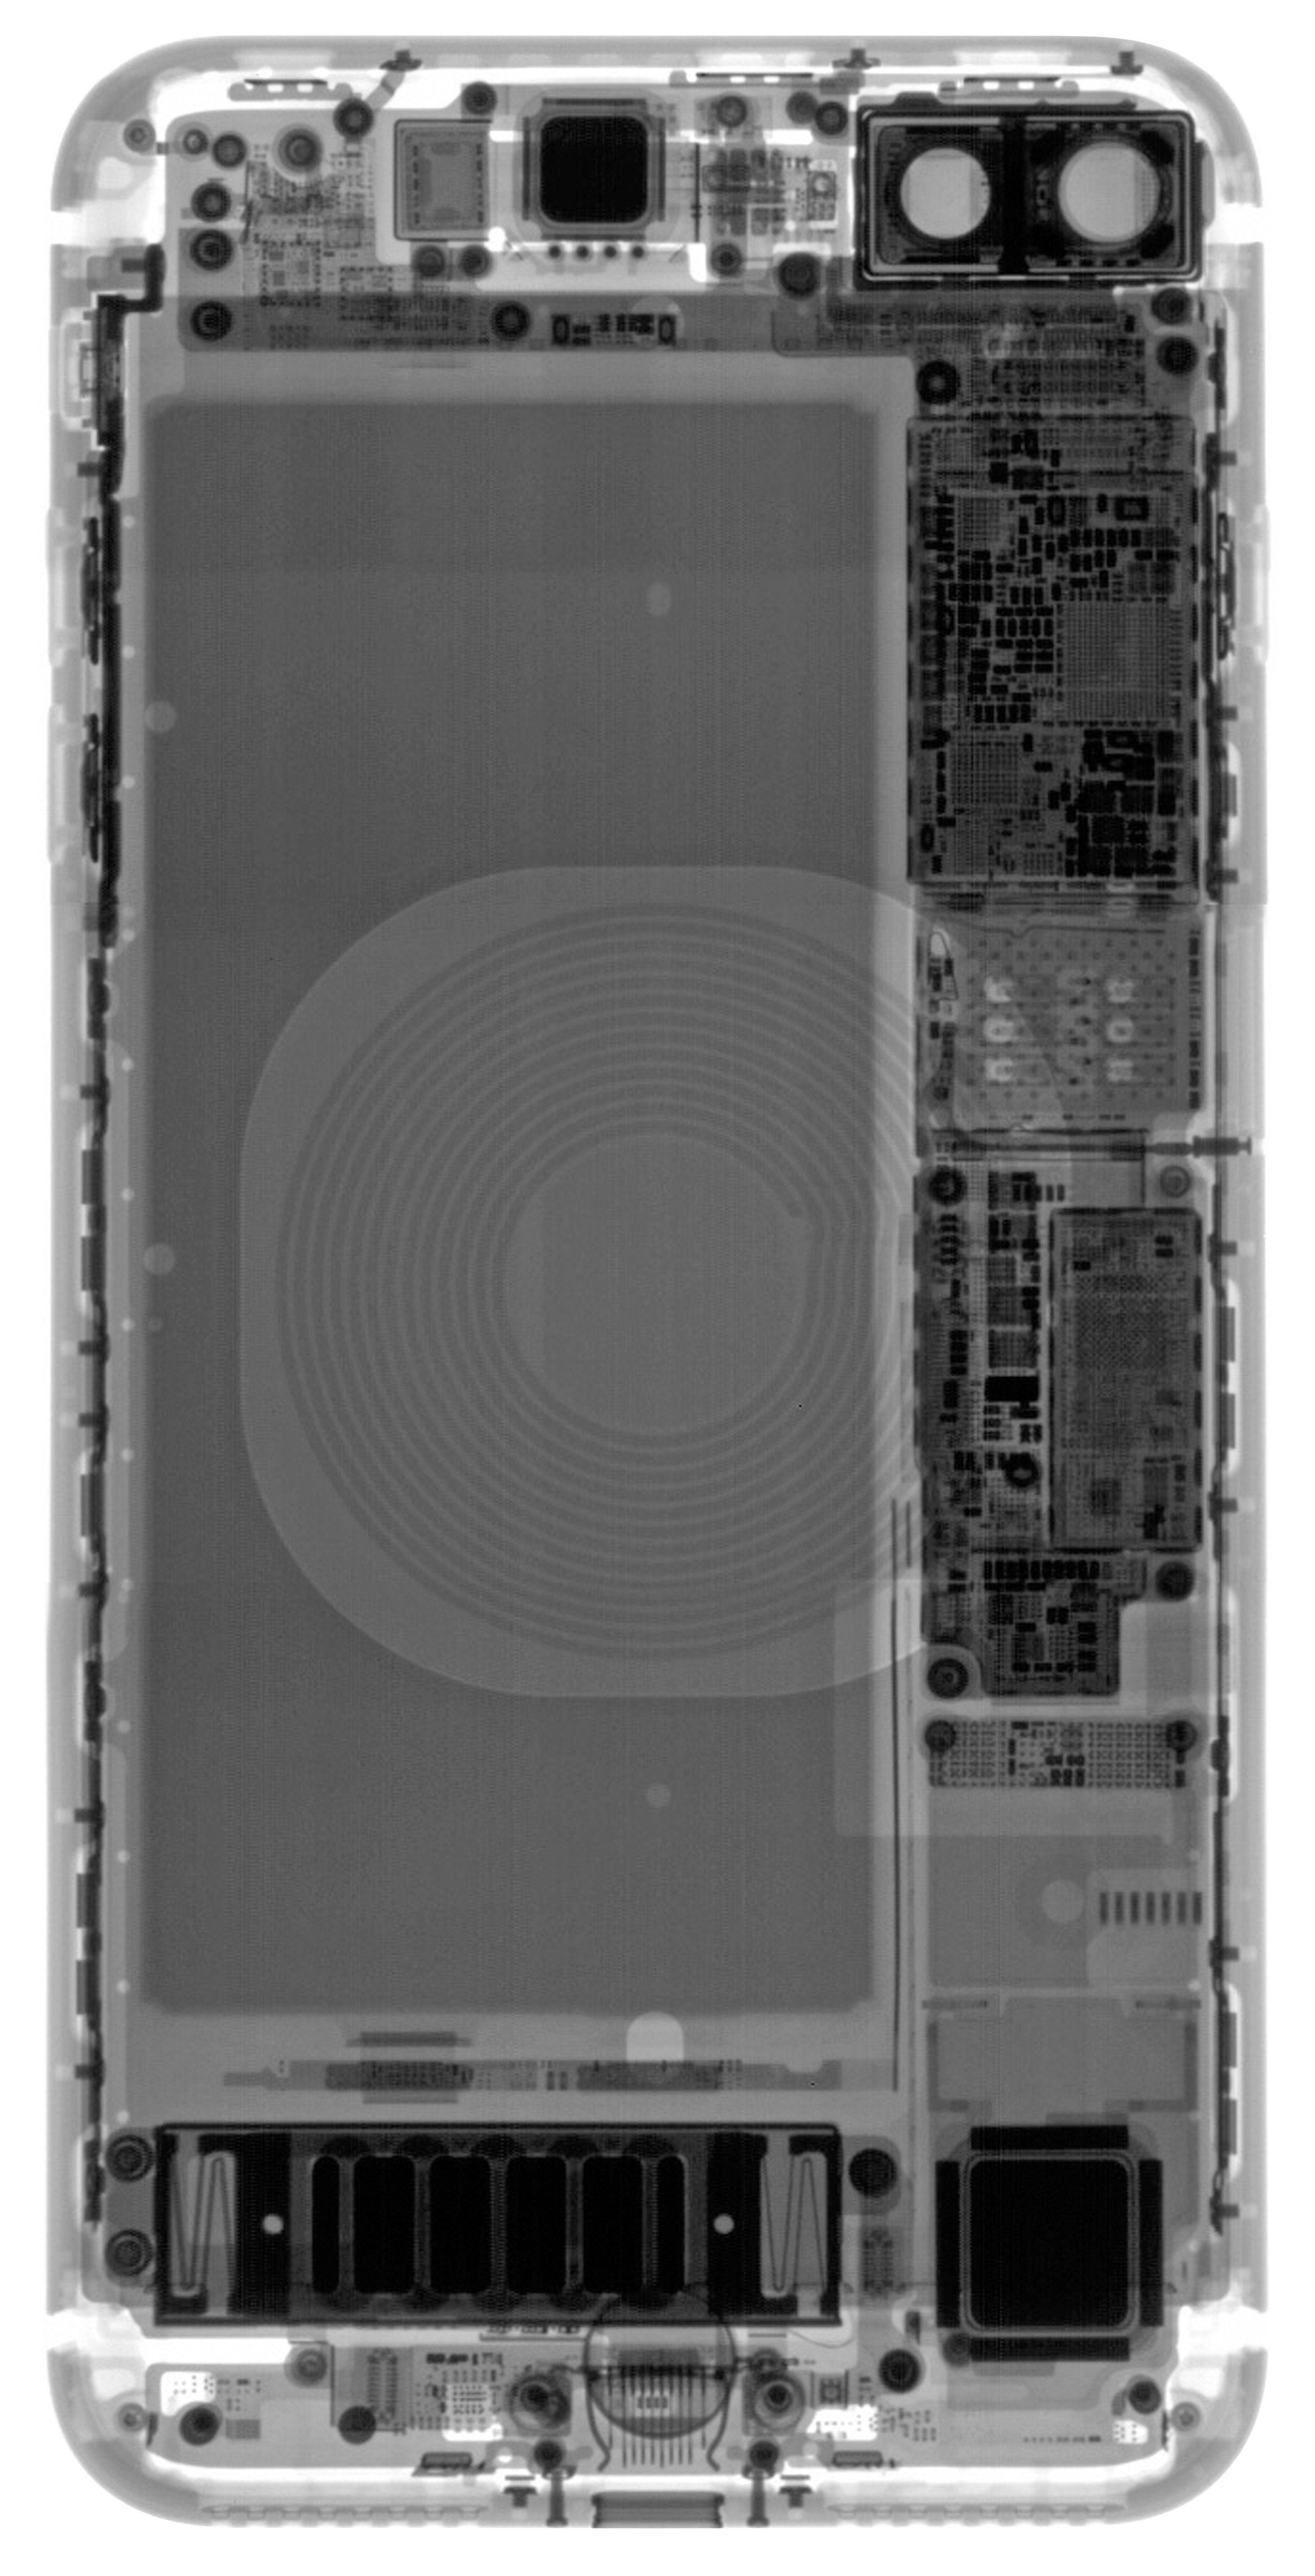 iPhone 8 Plus Black Wallpapers - Top Free iPhone 8 Plus Black ...